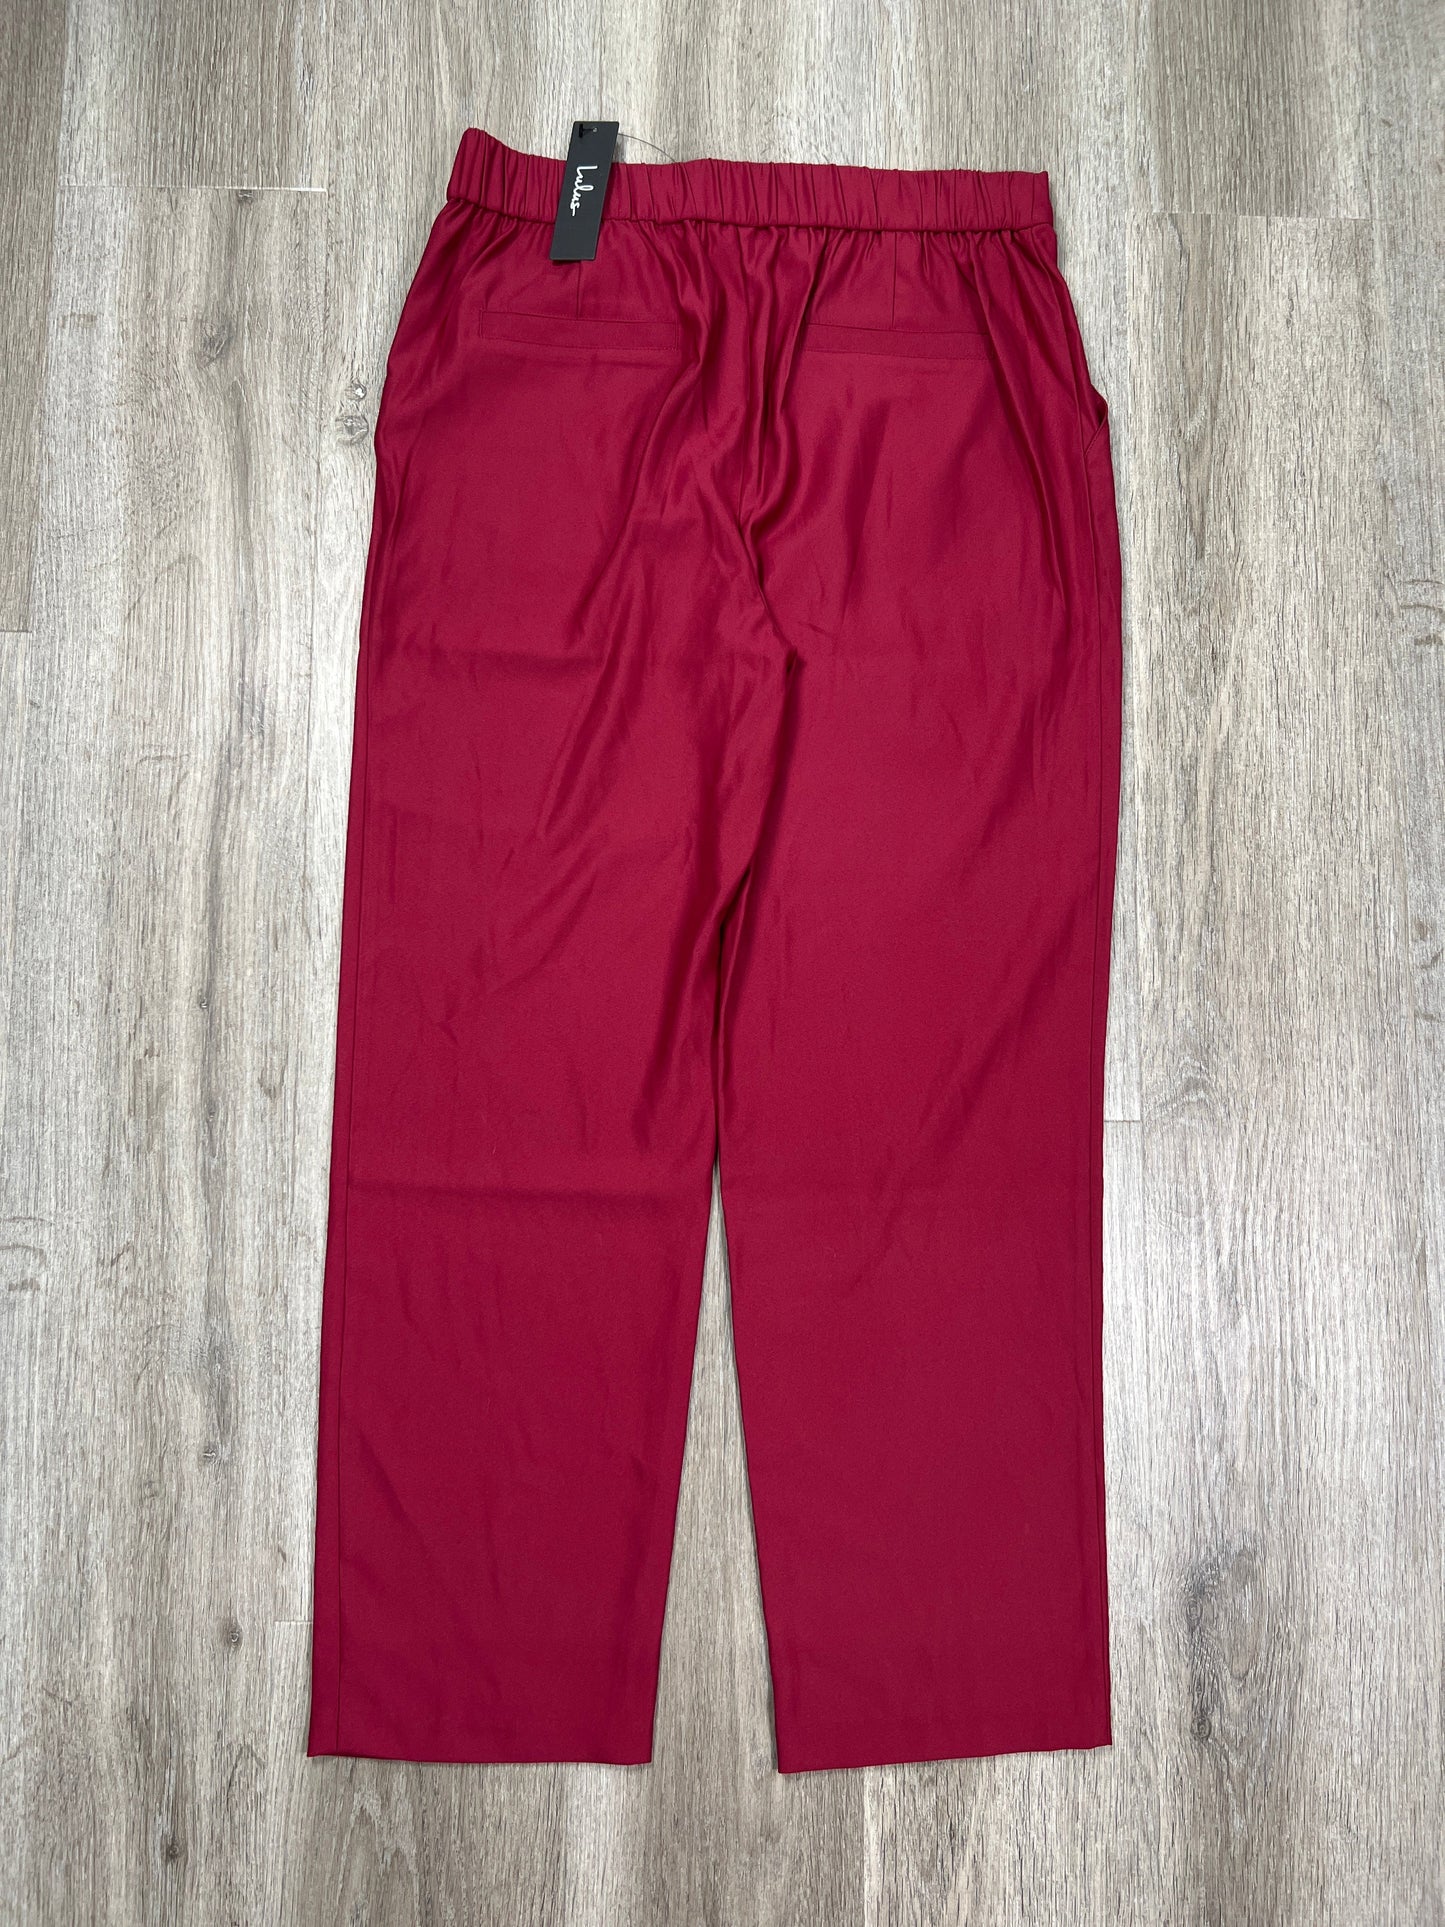 Red Pants Dress Lulus, Size L